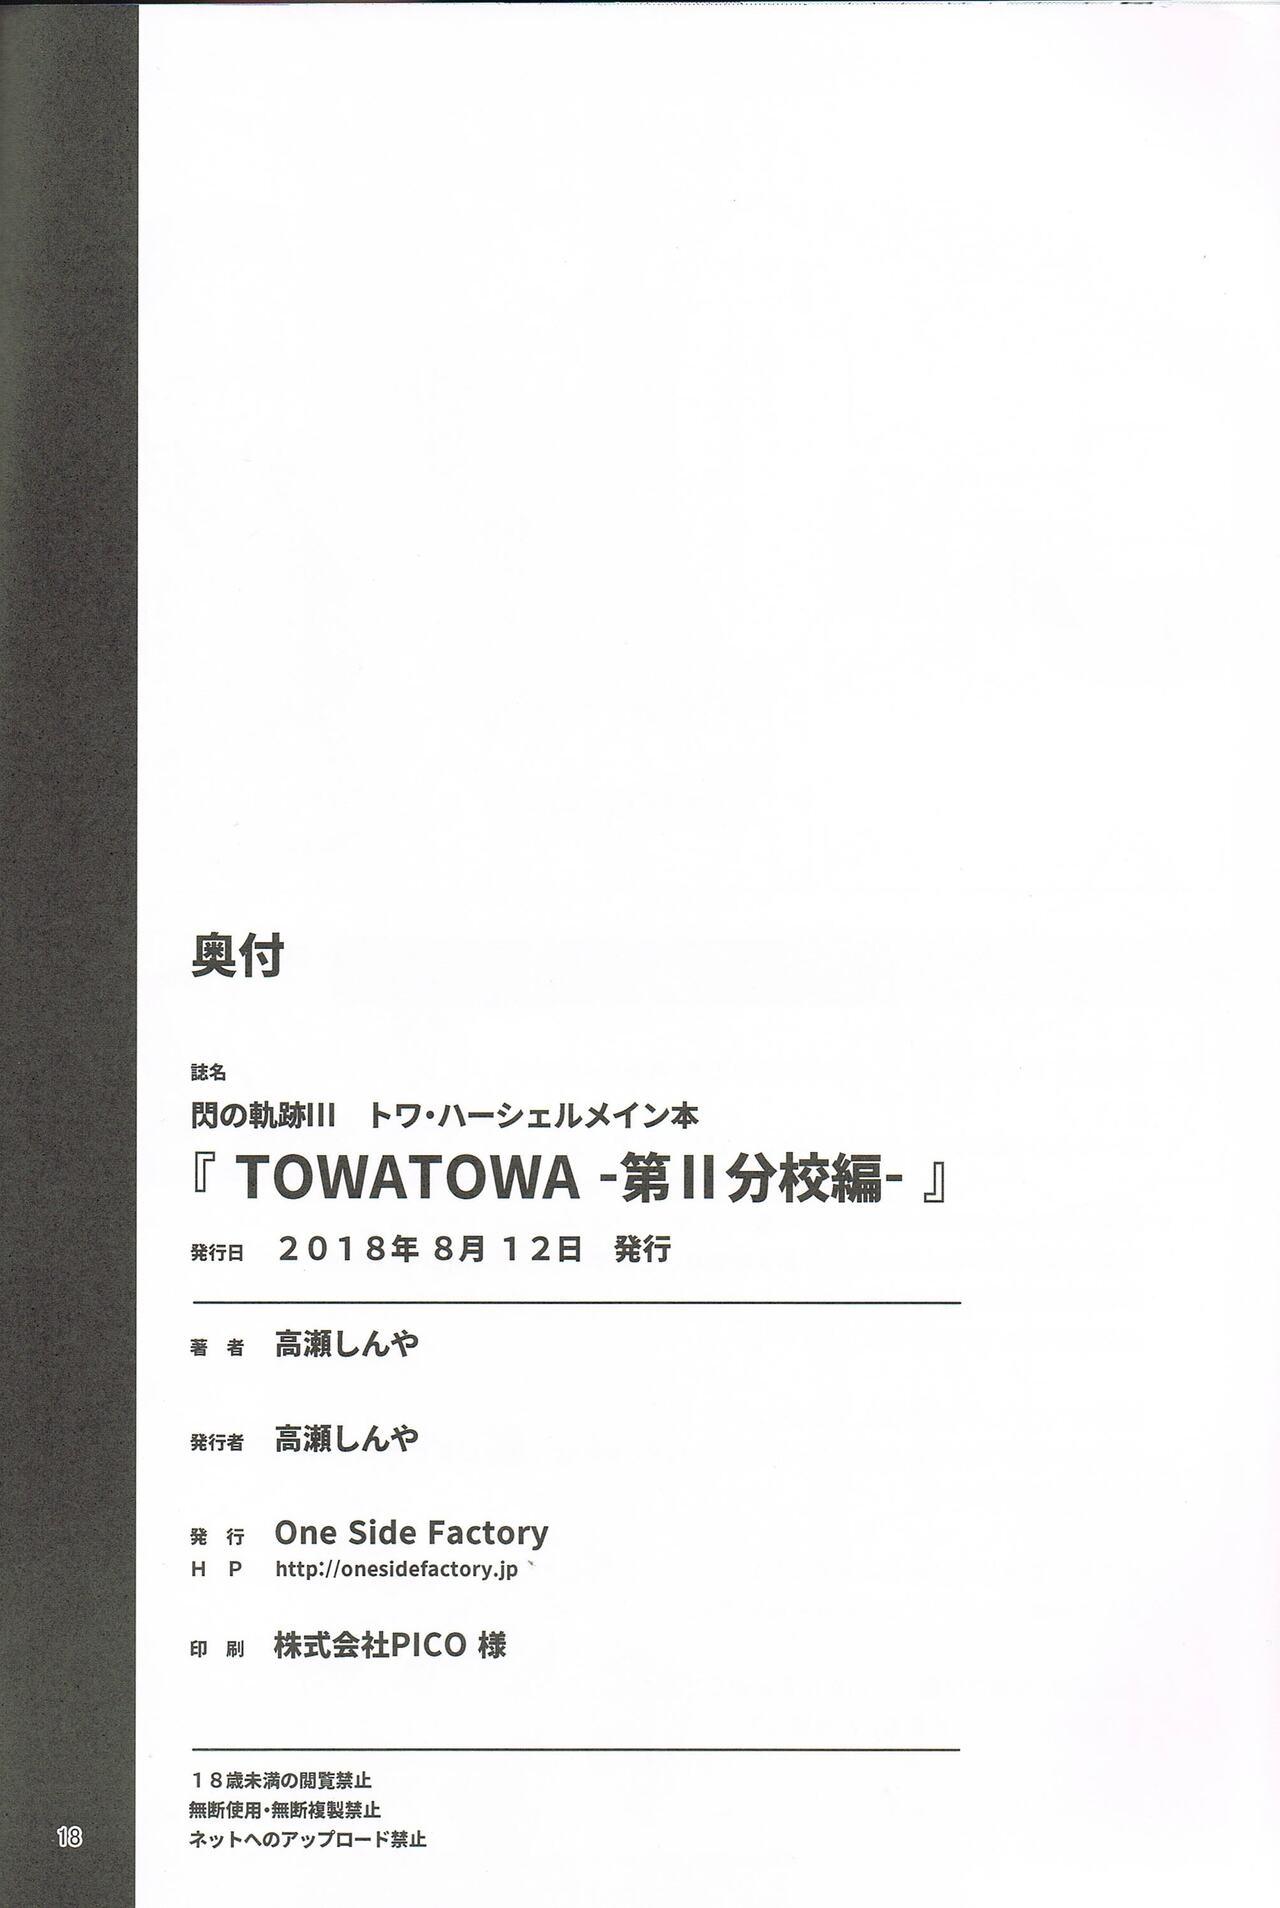 TOWATOWA -Second Branch School Edition 16